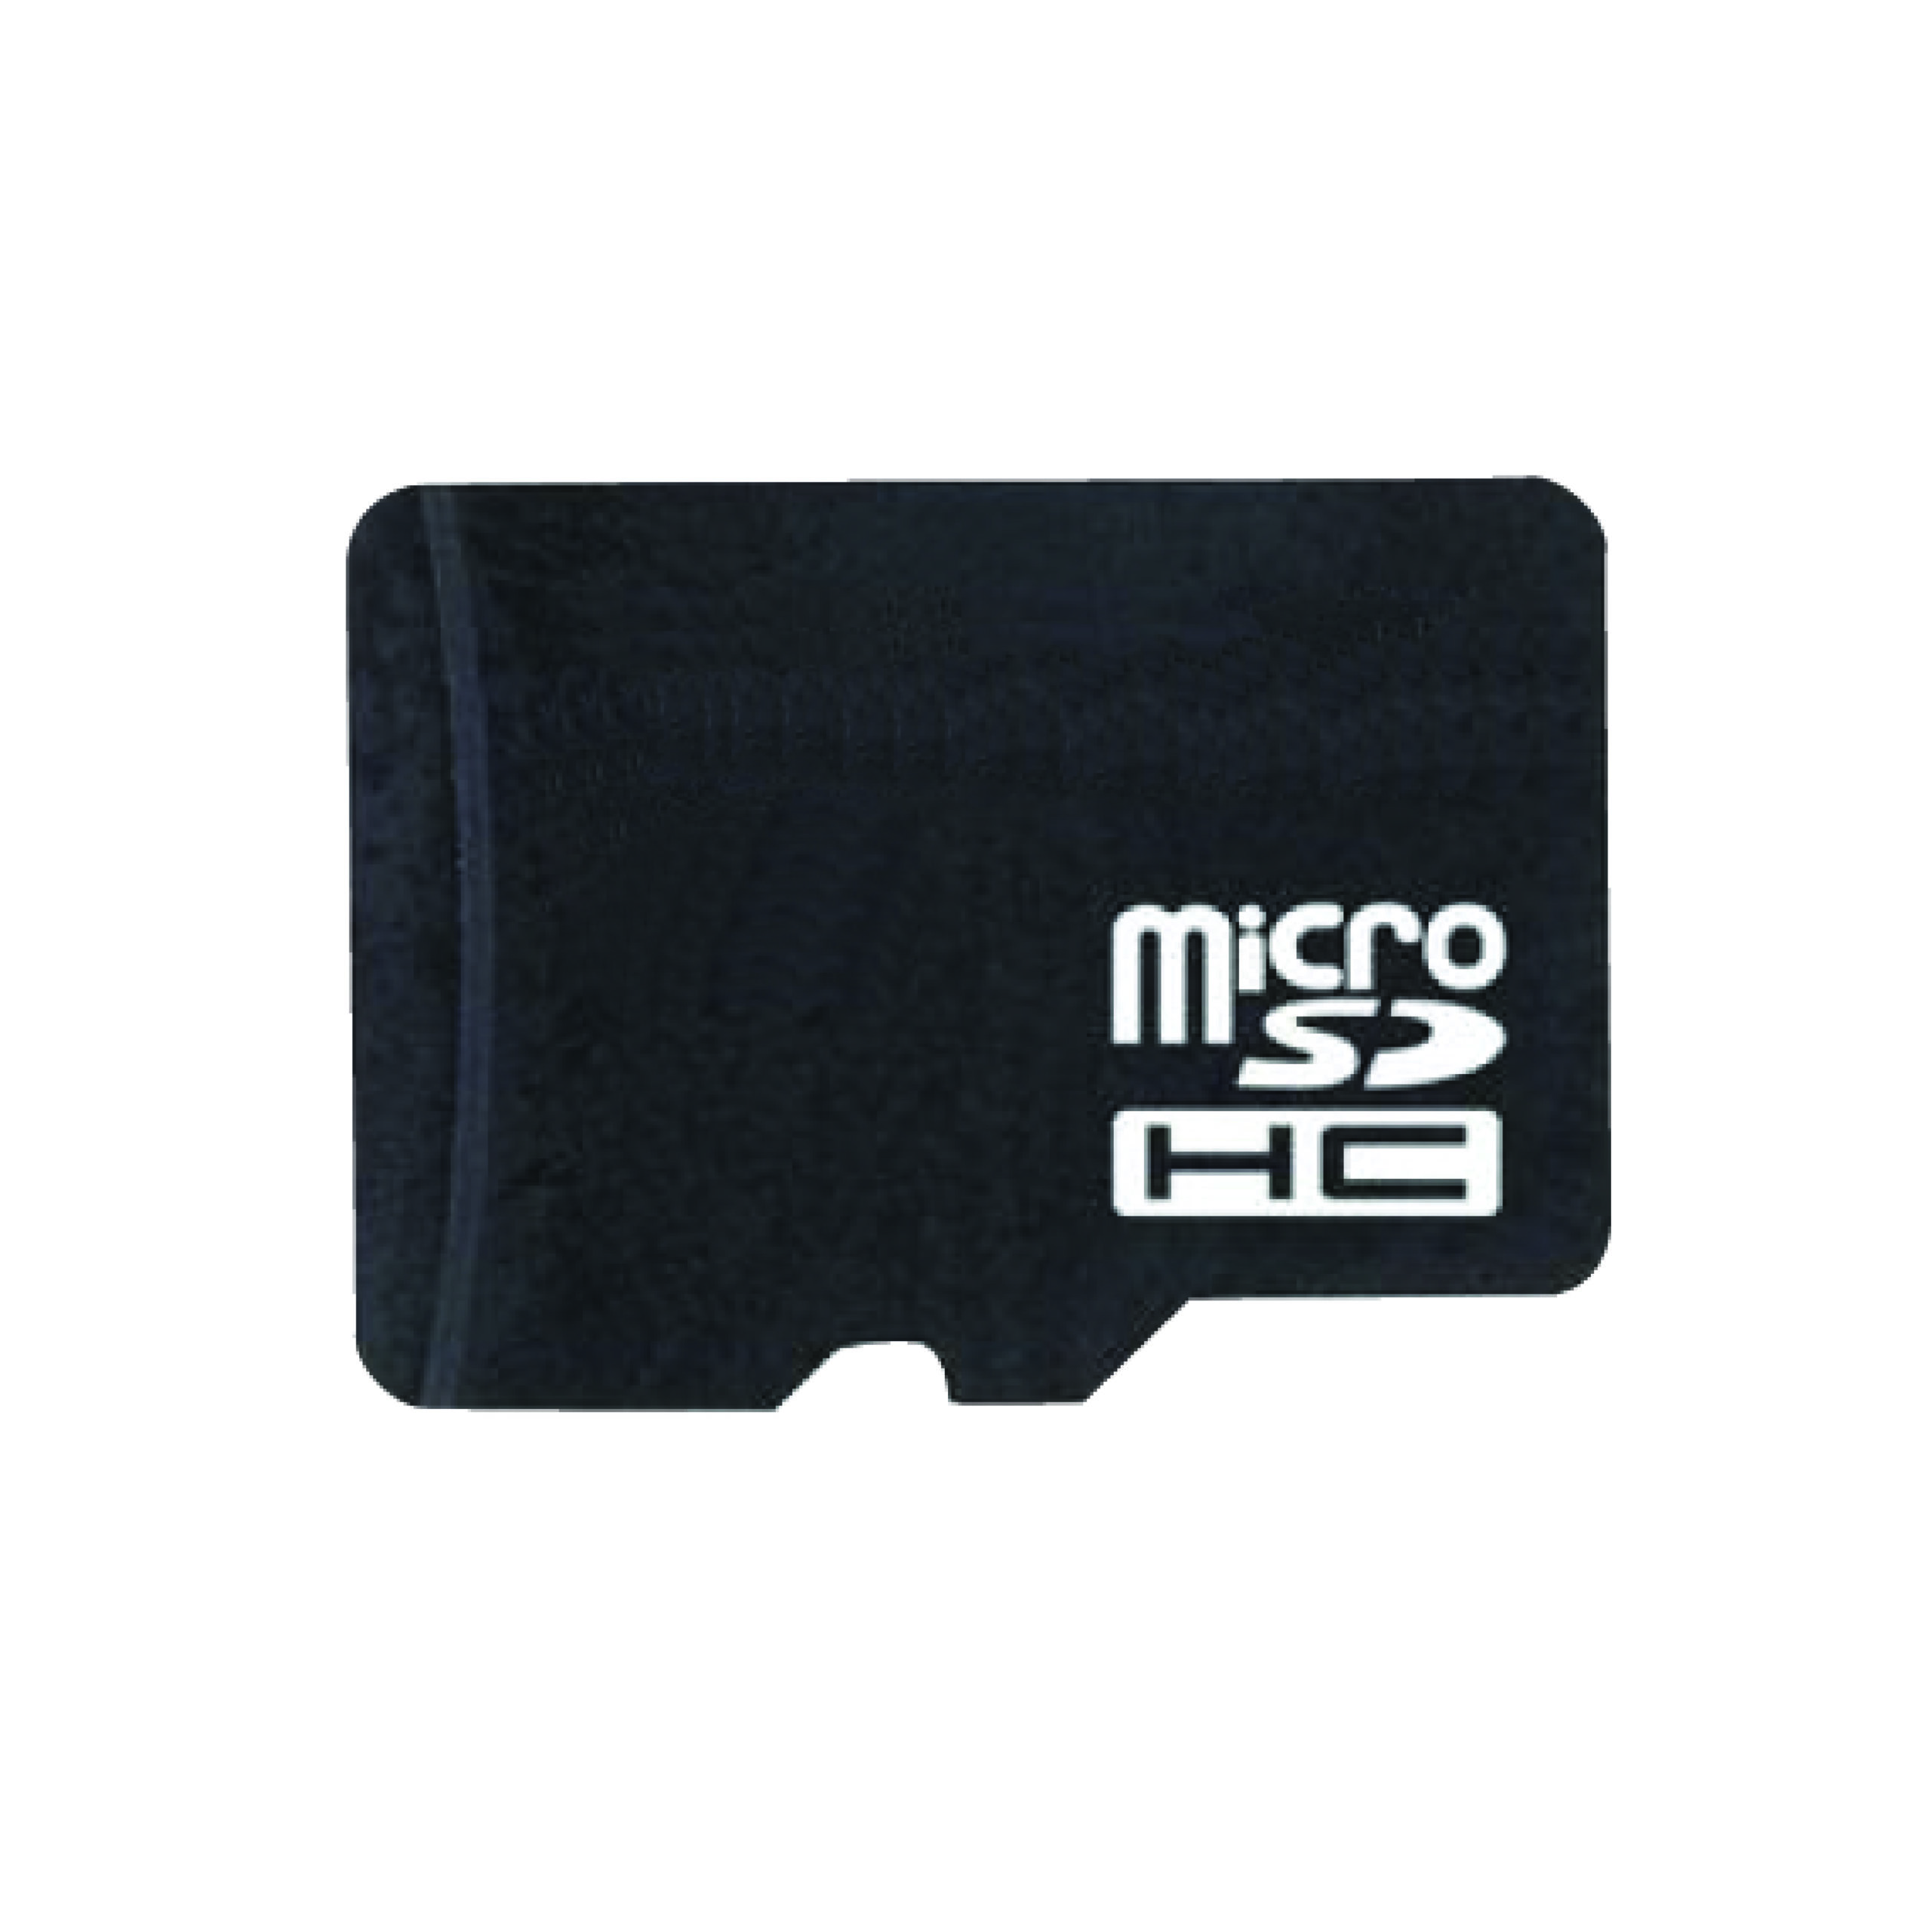 MicroSD, Memory Cards